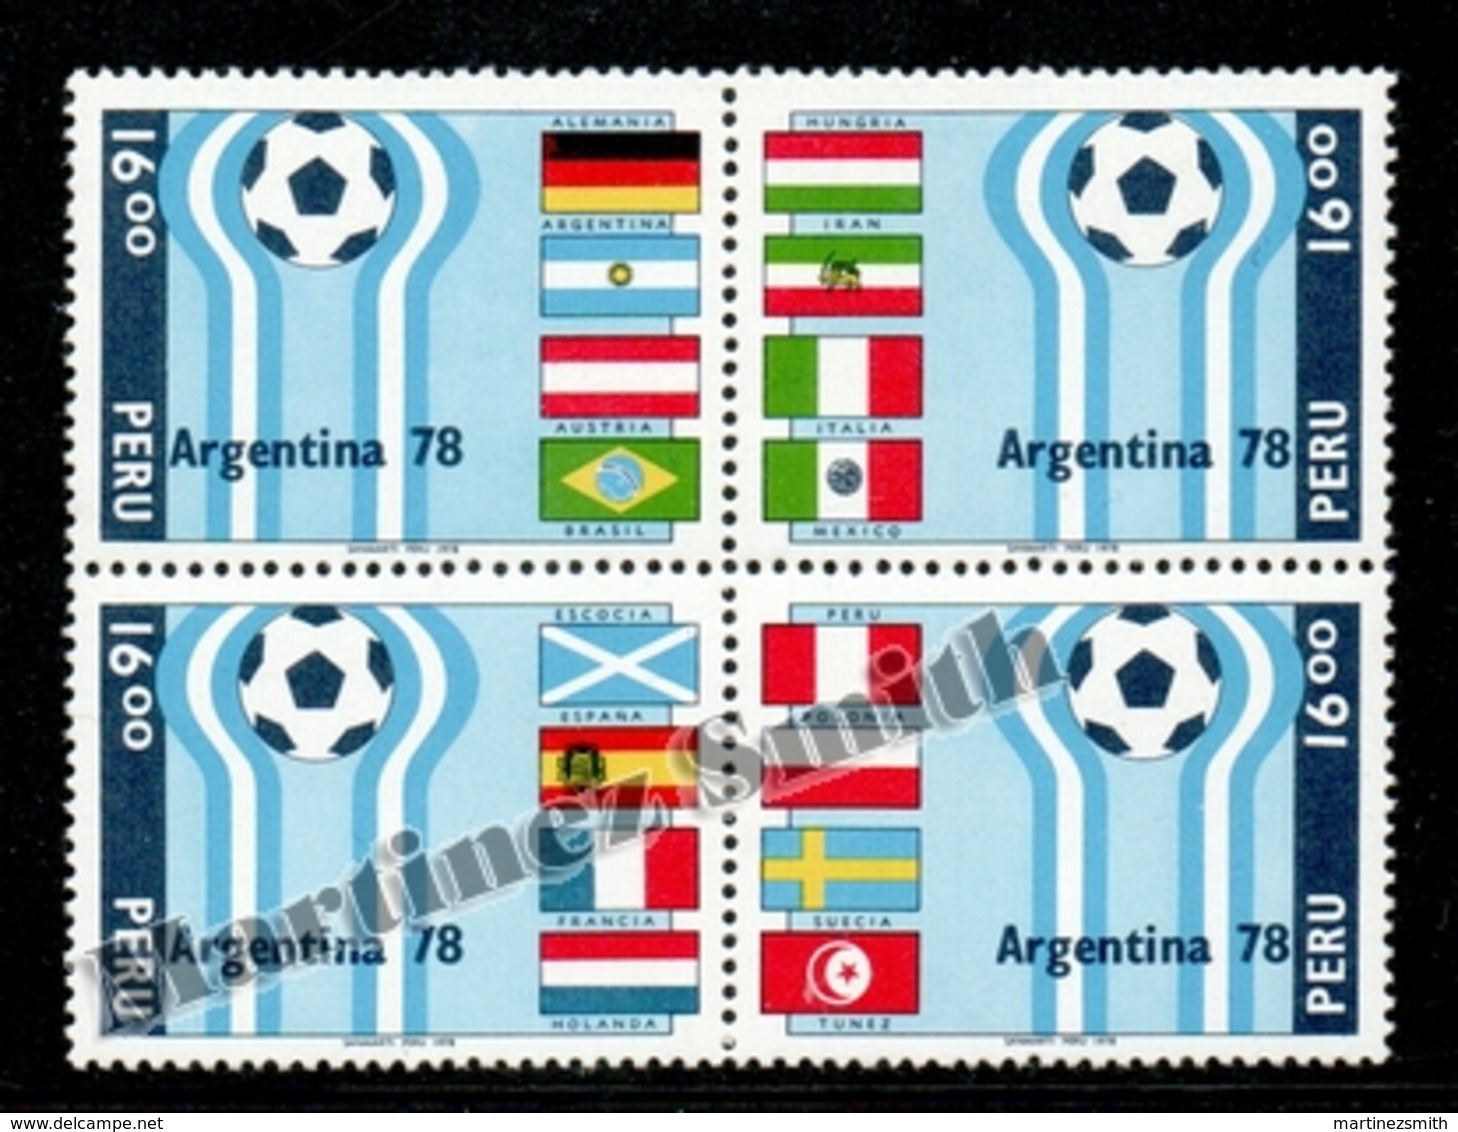 Peru - Perou 1978 Yvert 630-33, Football World Cup Argentina 78 - MNH - Peru